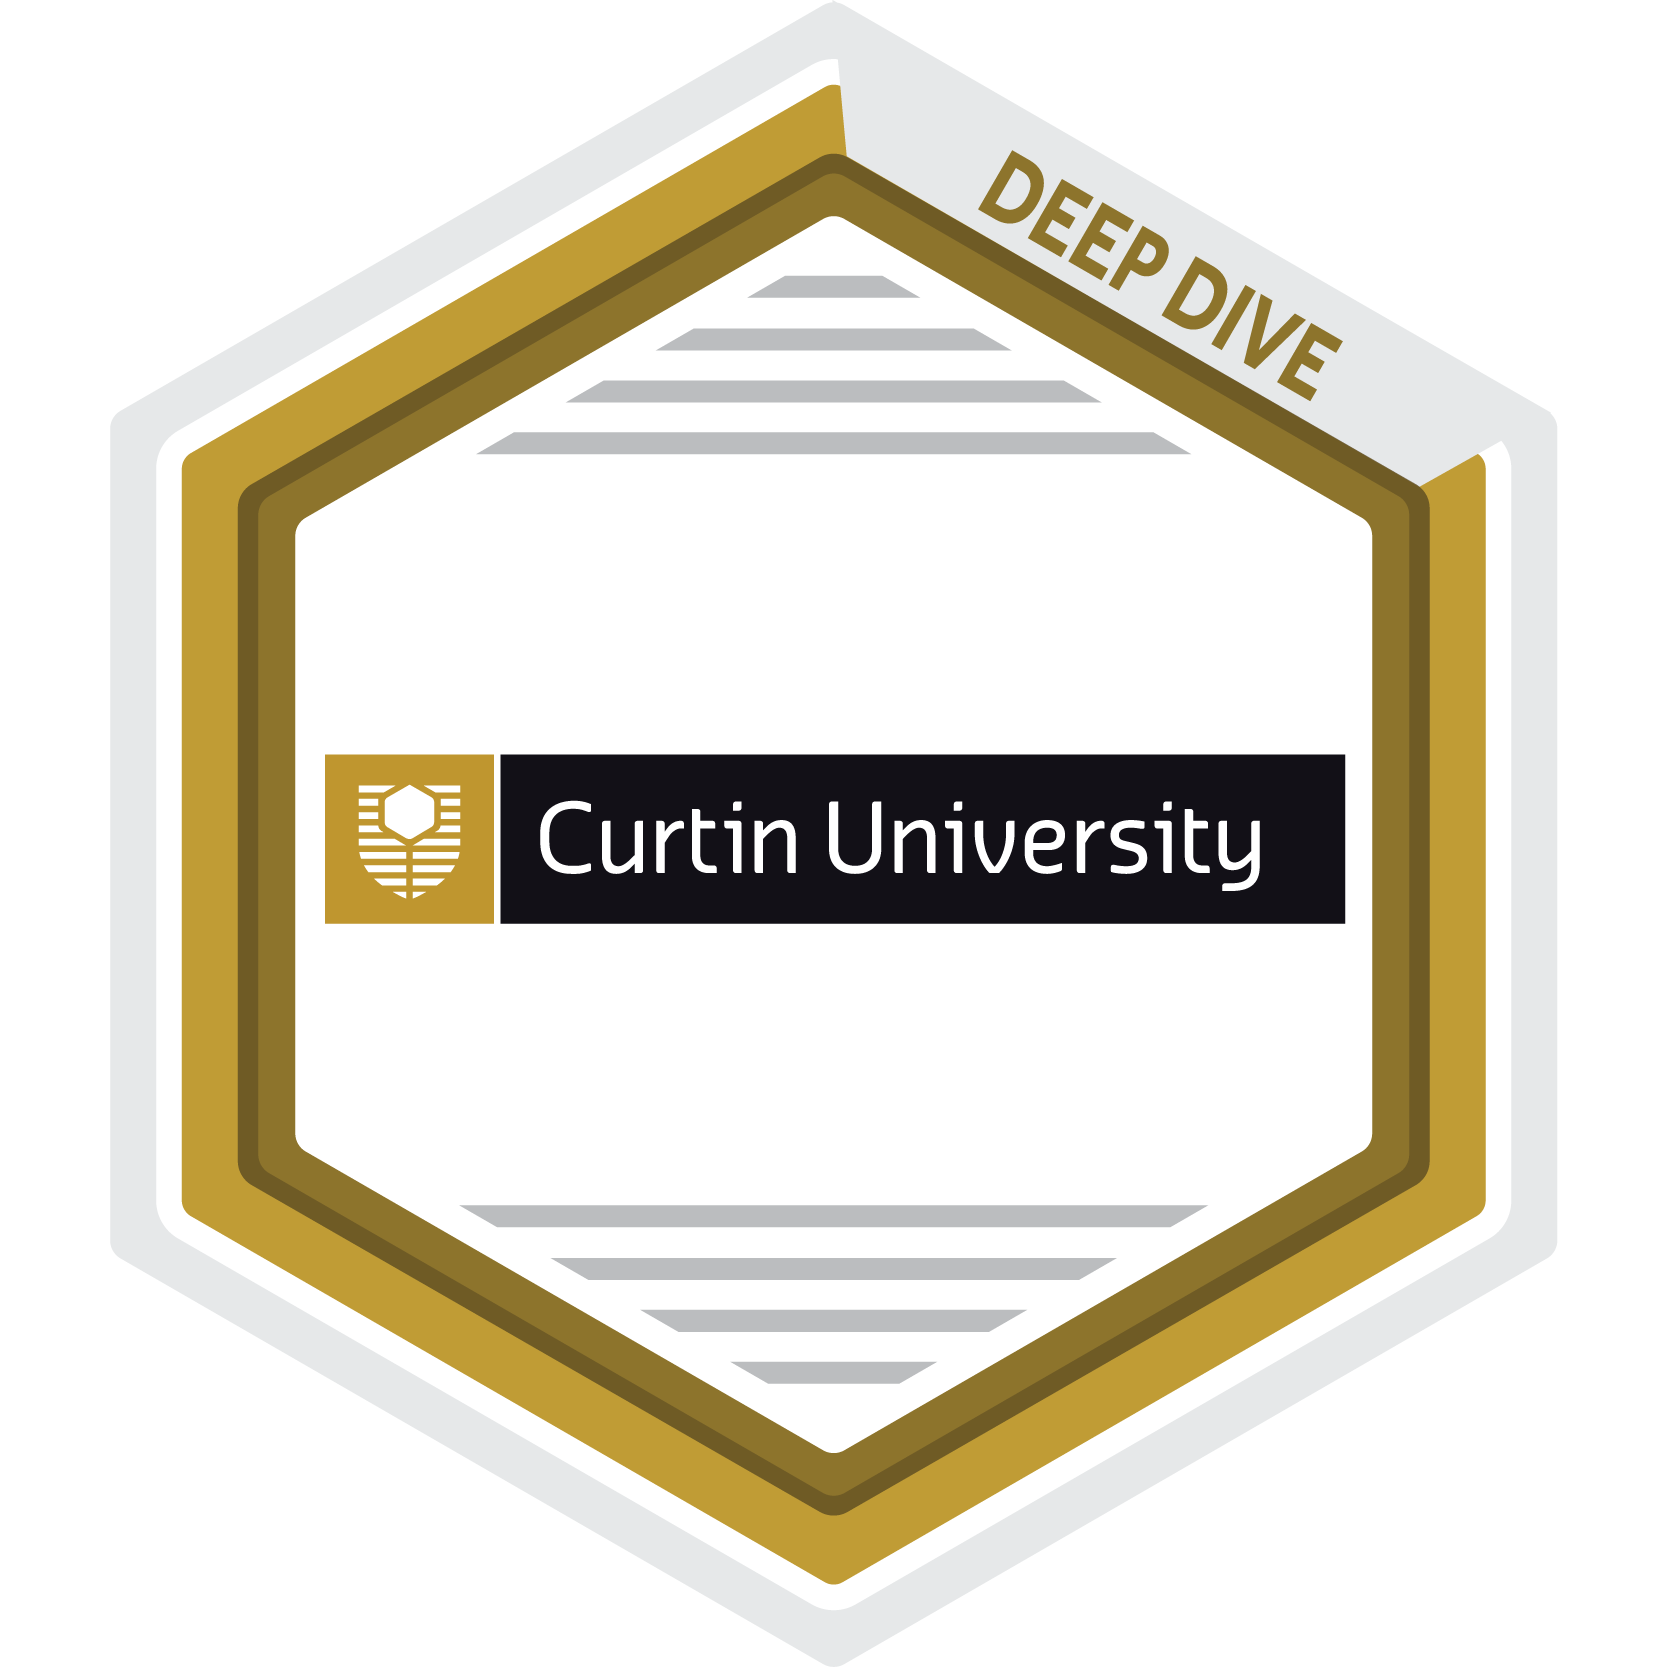 Curtin Deep Dive Badge - Hexagon with curtin logo